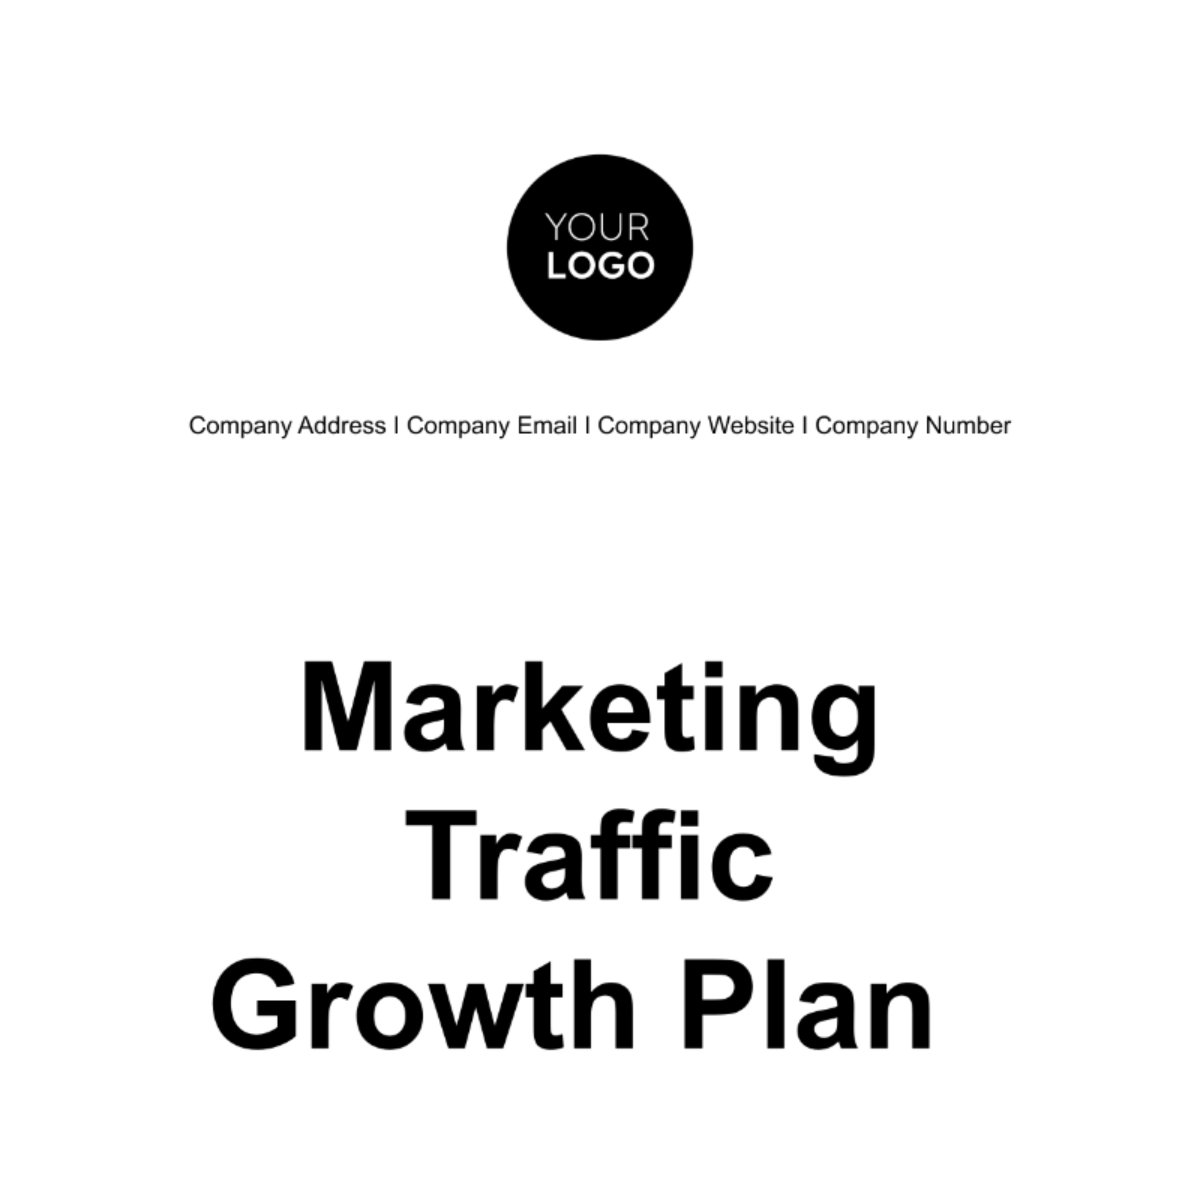 Marketing Traffic Growth Plan Template